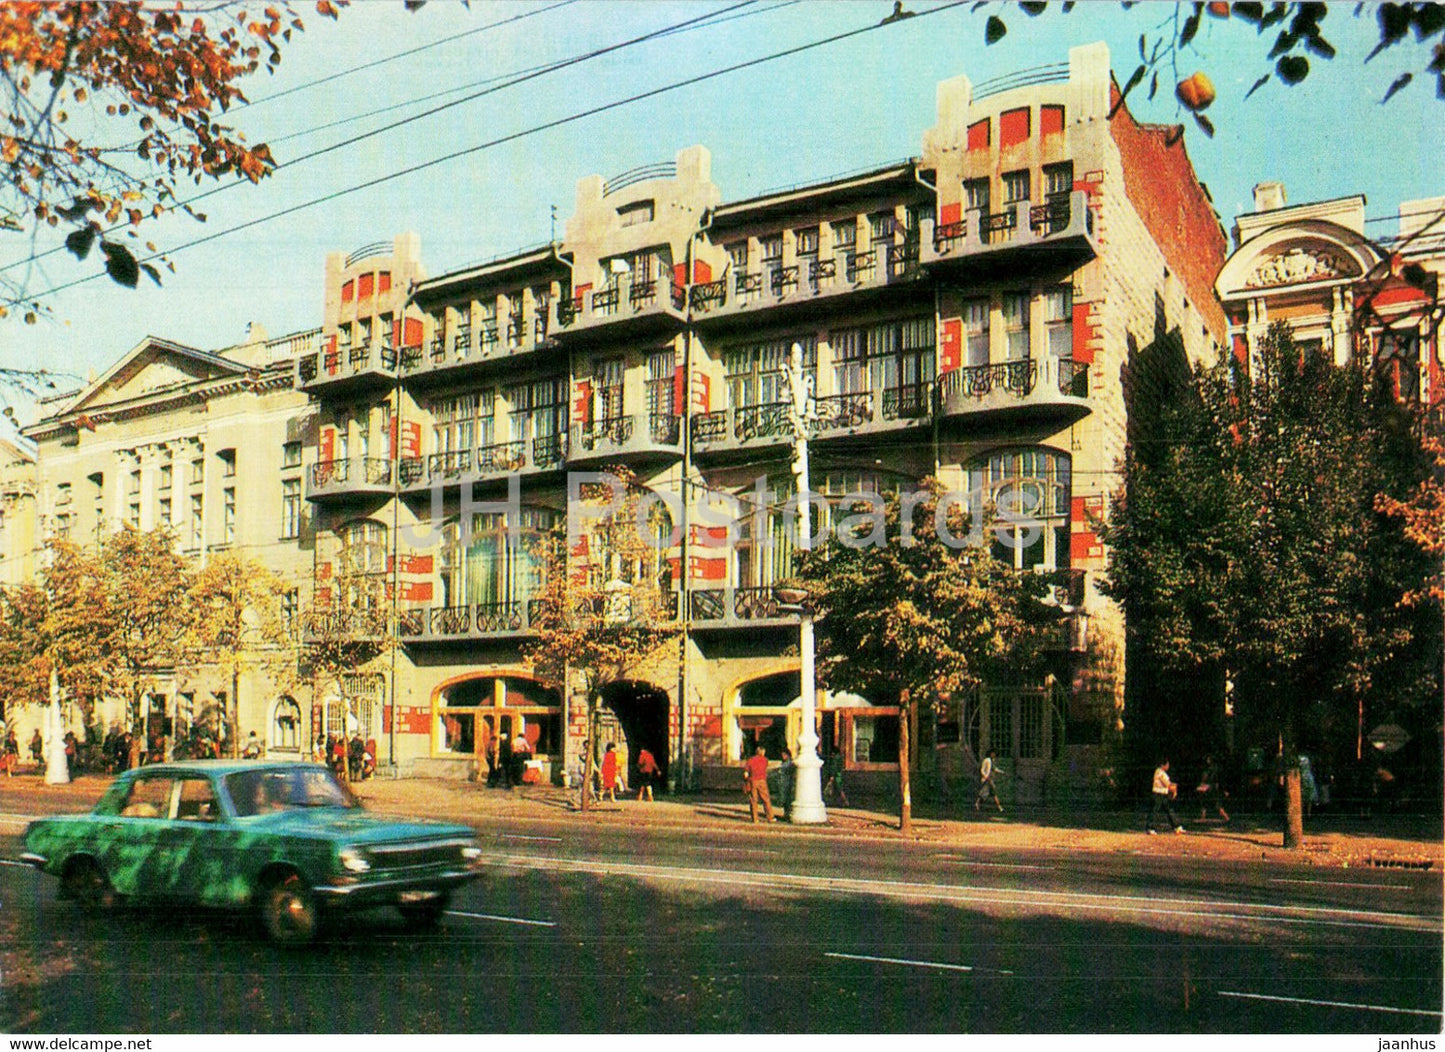 Voronezh - Tsentralnaya (Central) hotel - car Volga - 1985 - Russia USSR - unused - JH Postcards